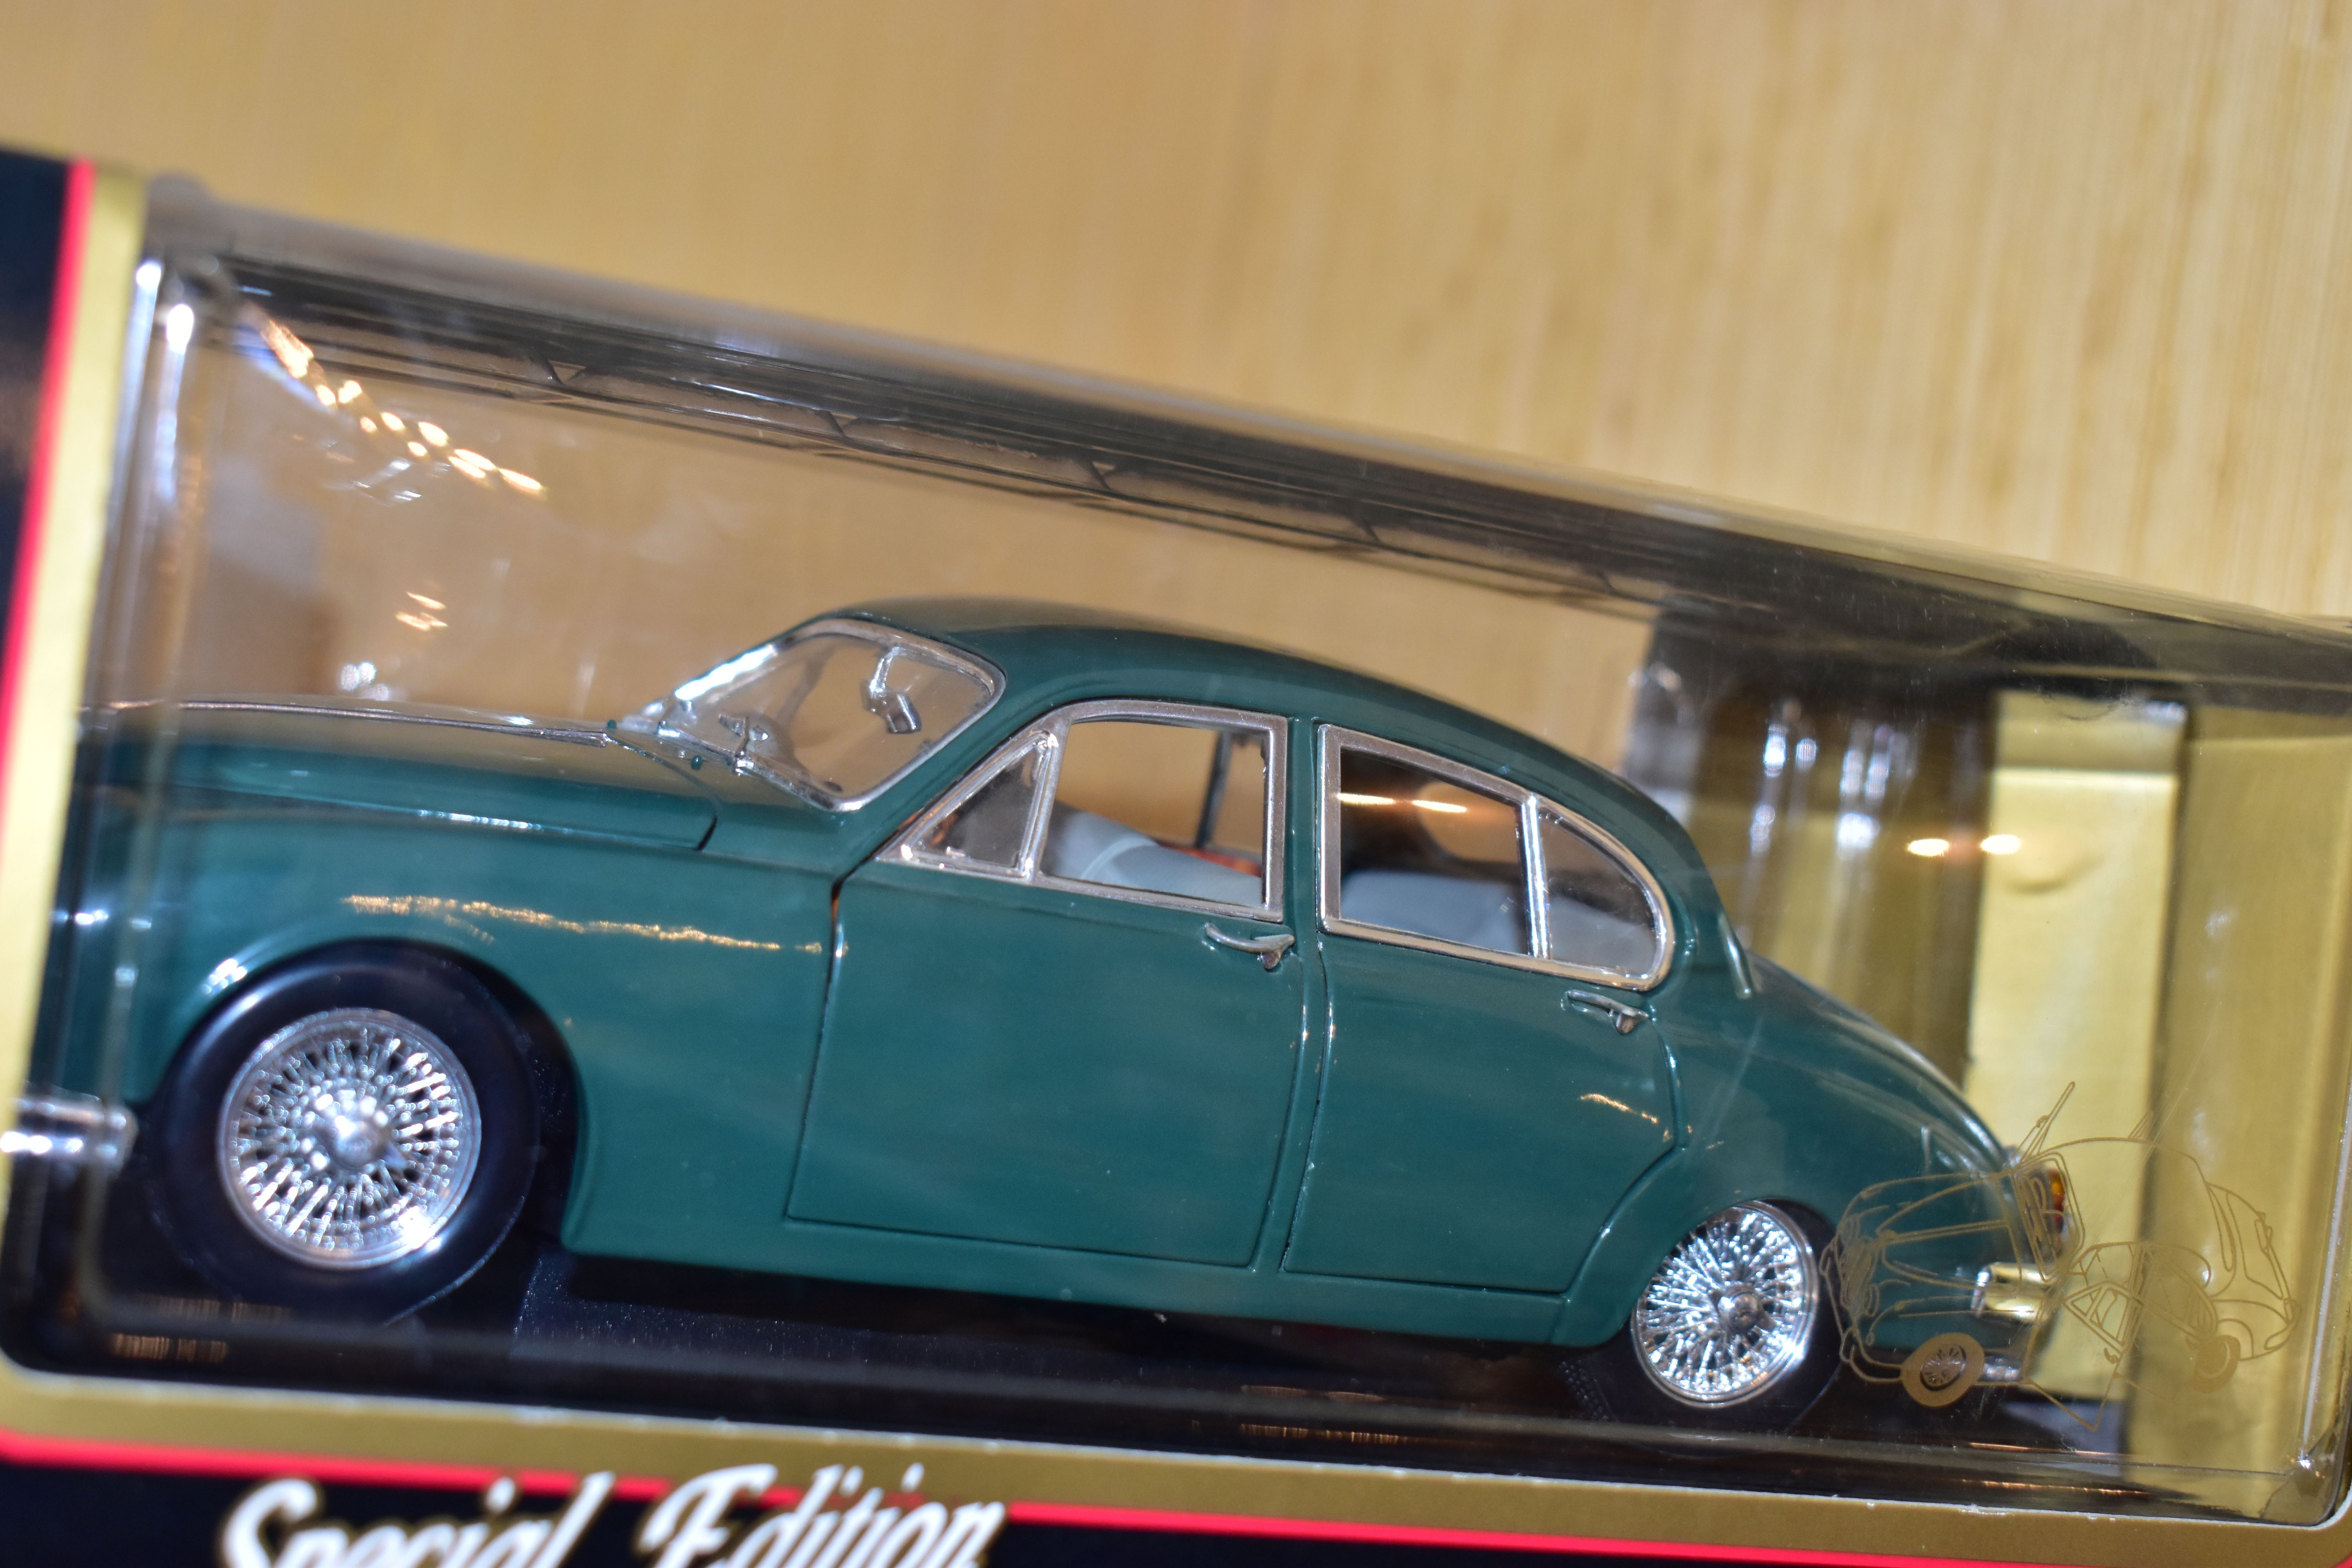 SEVEN BOXED ASSORTED MODERN DIECAST BRITISH CAR MODELS, all 1:18 scale Bburago 1937 Jaguar SS100, - Image 2 of 16